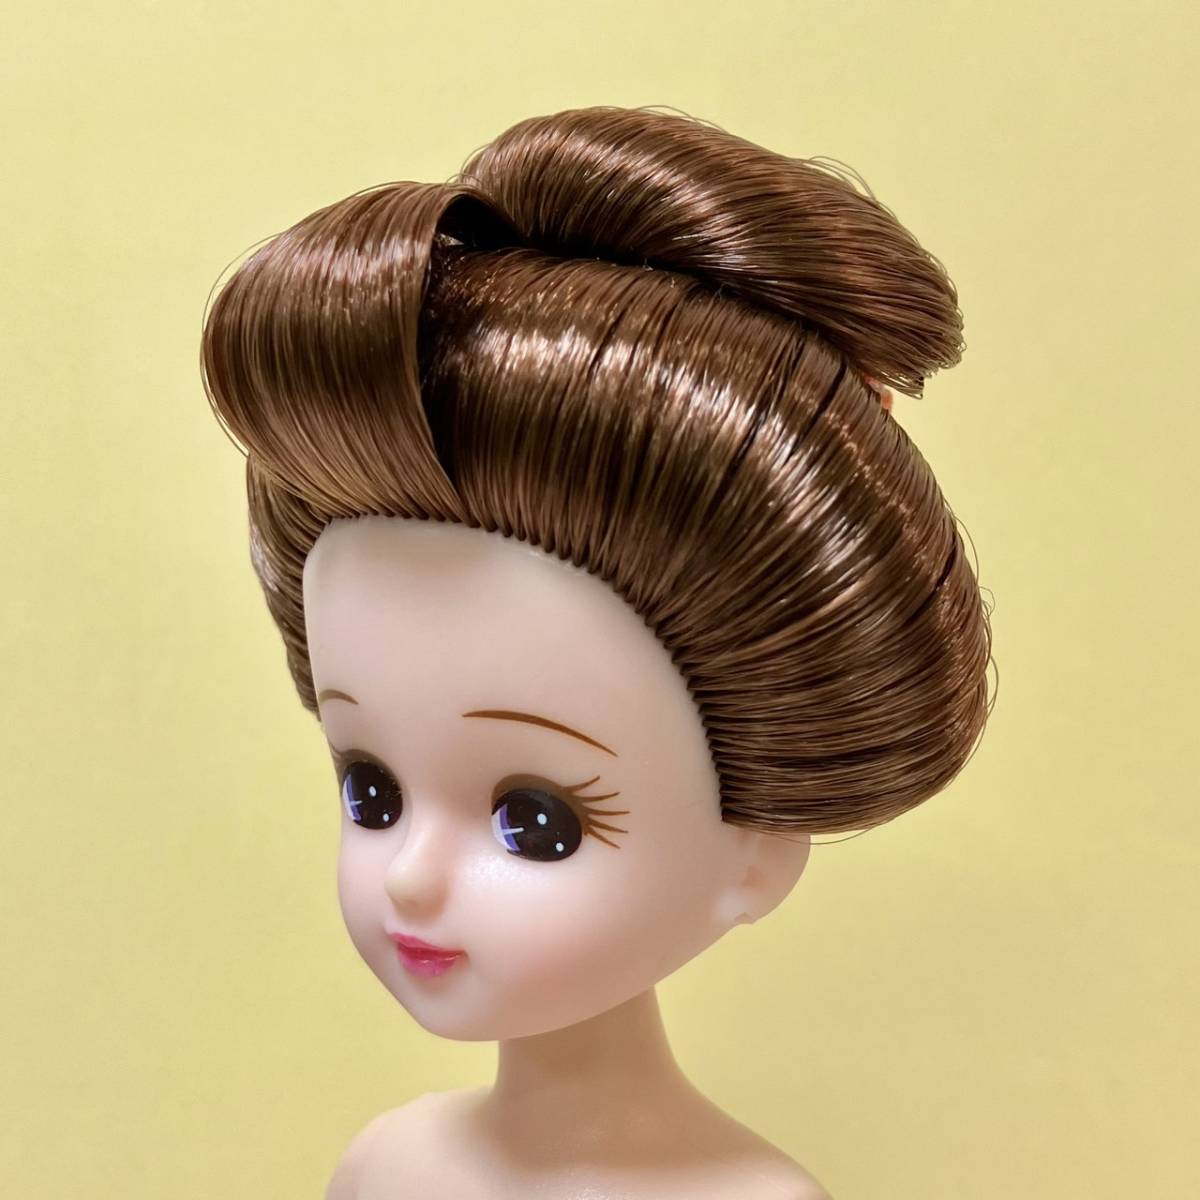 Yahoo!オークション -「日本髪」(人形、キャラクタードール) の落札